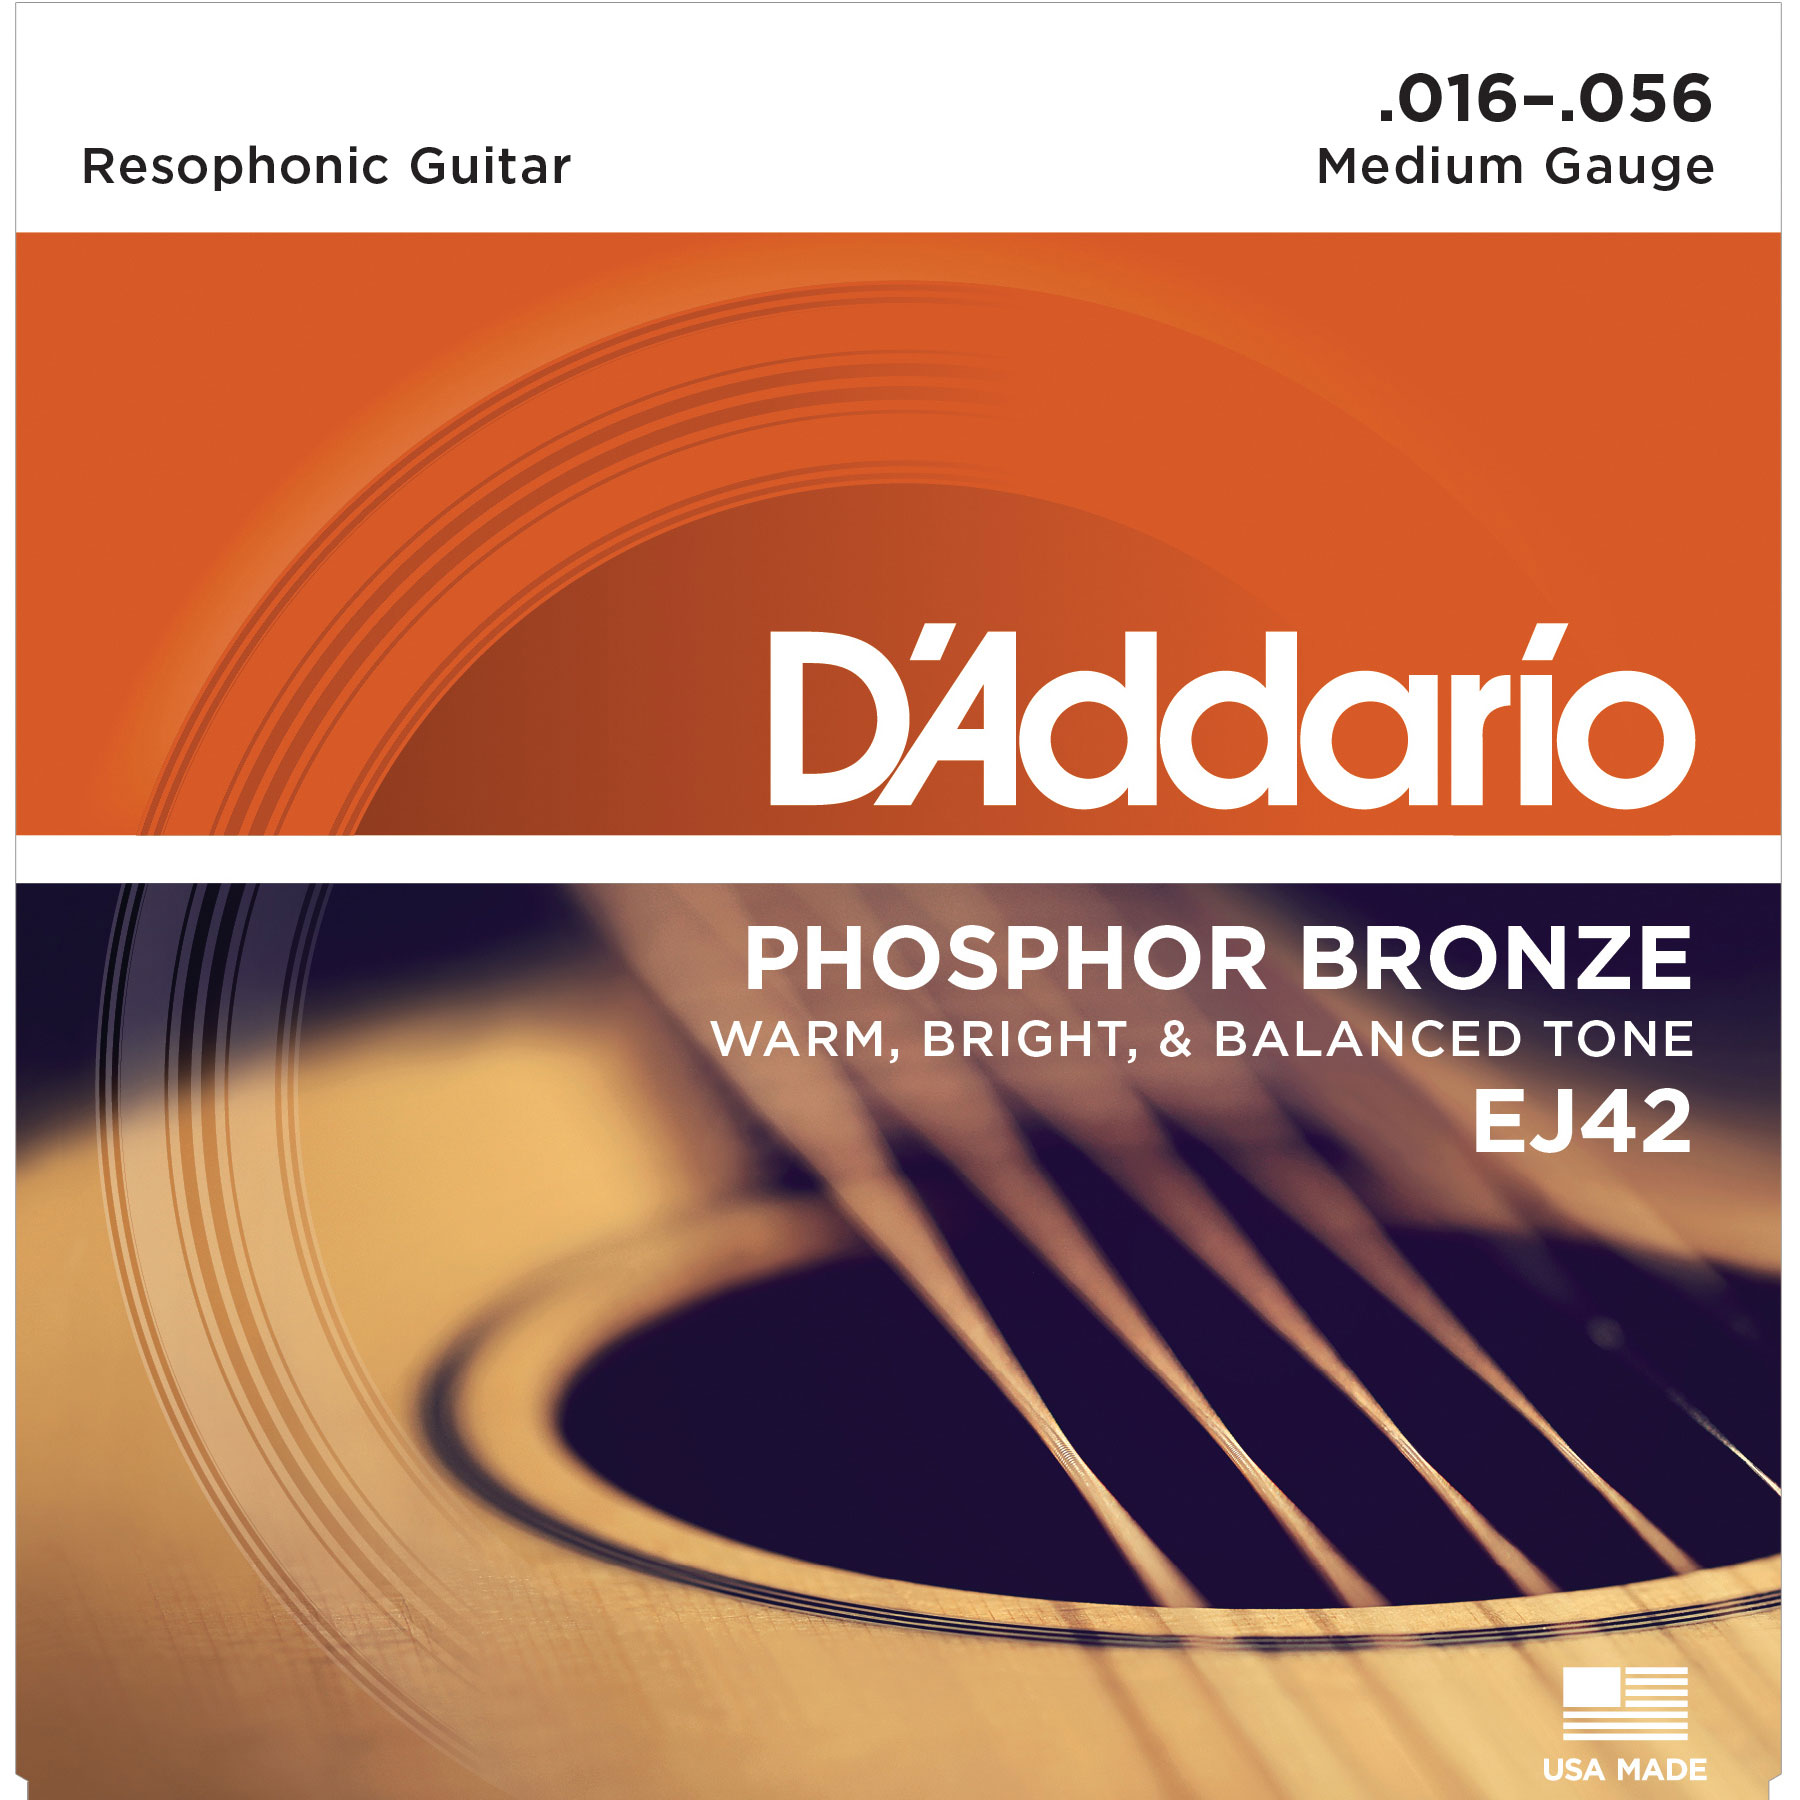 D'Addario Phosphor Bronze Wound Resophonic Guitar Strings